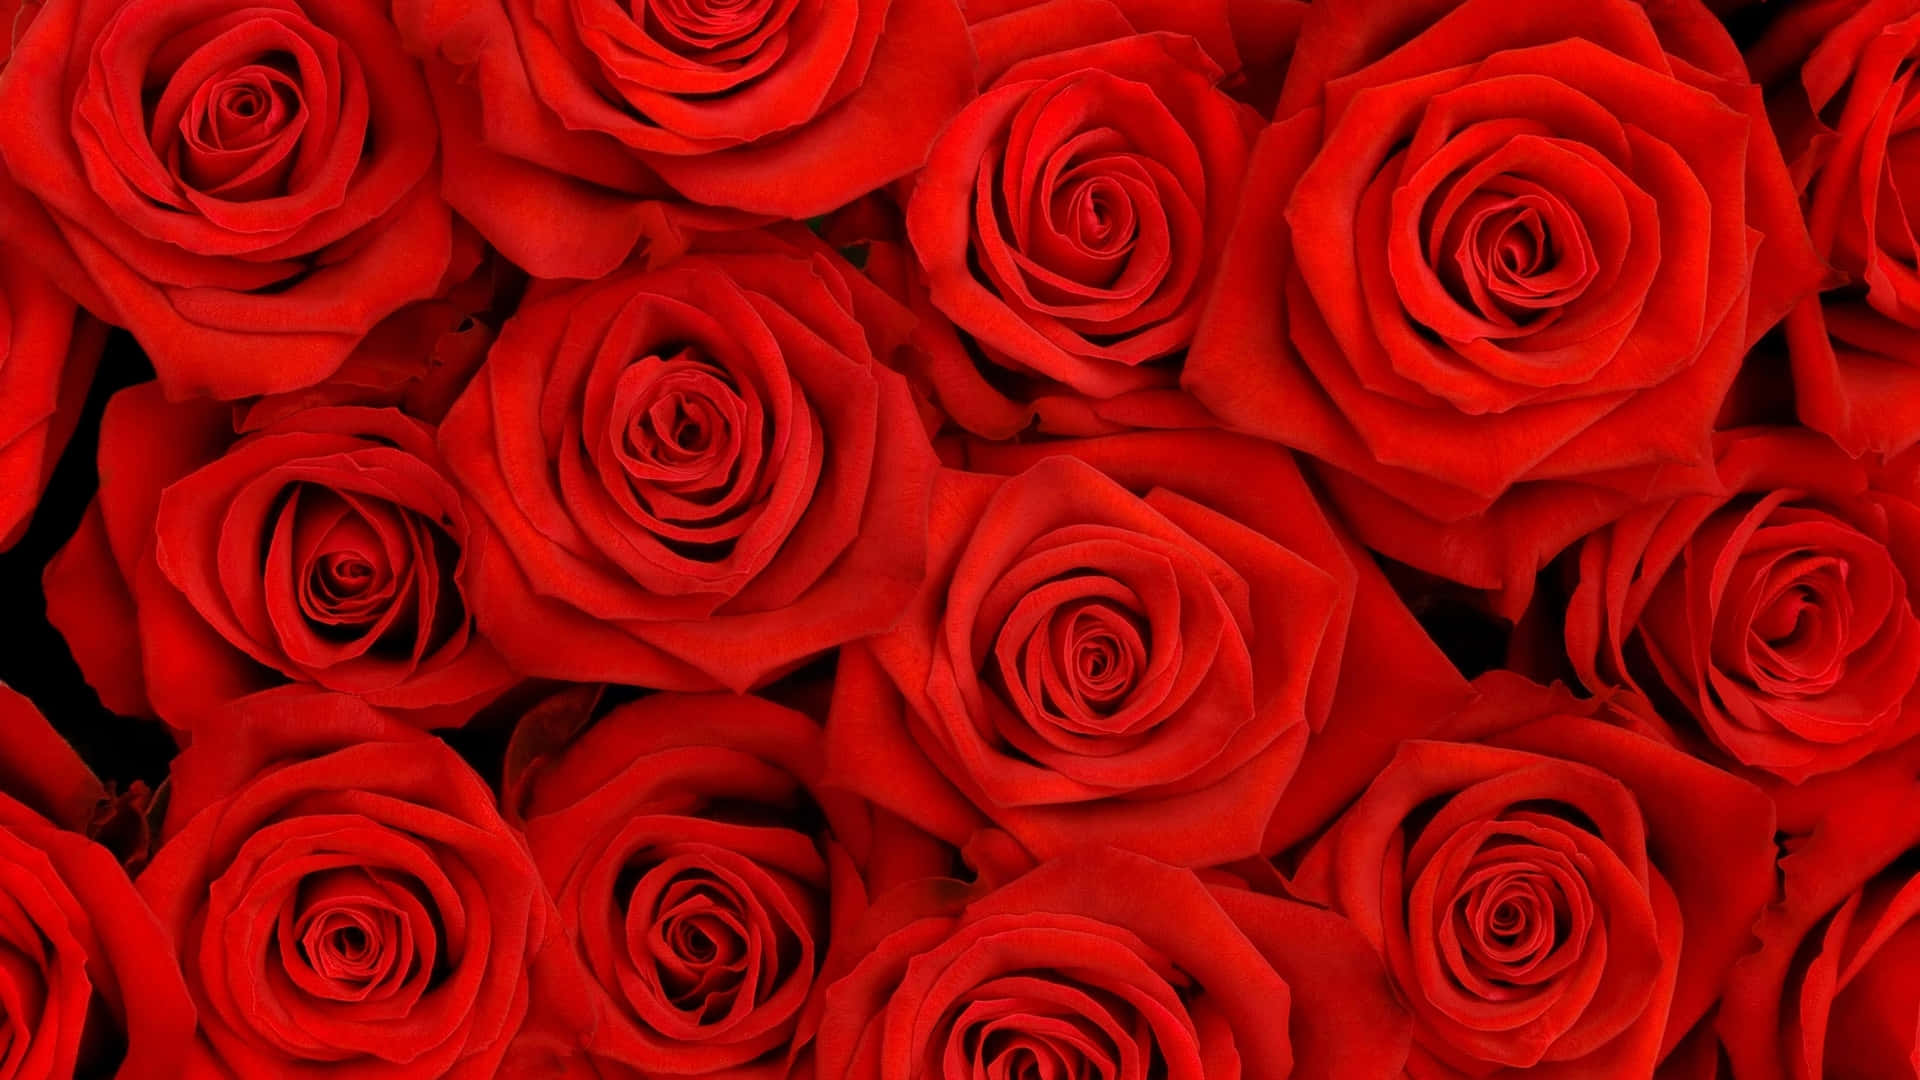 Einstrauß Lebhafter Roter Rosen. Wallpaper